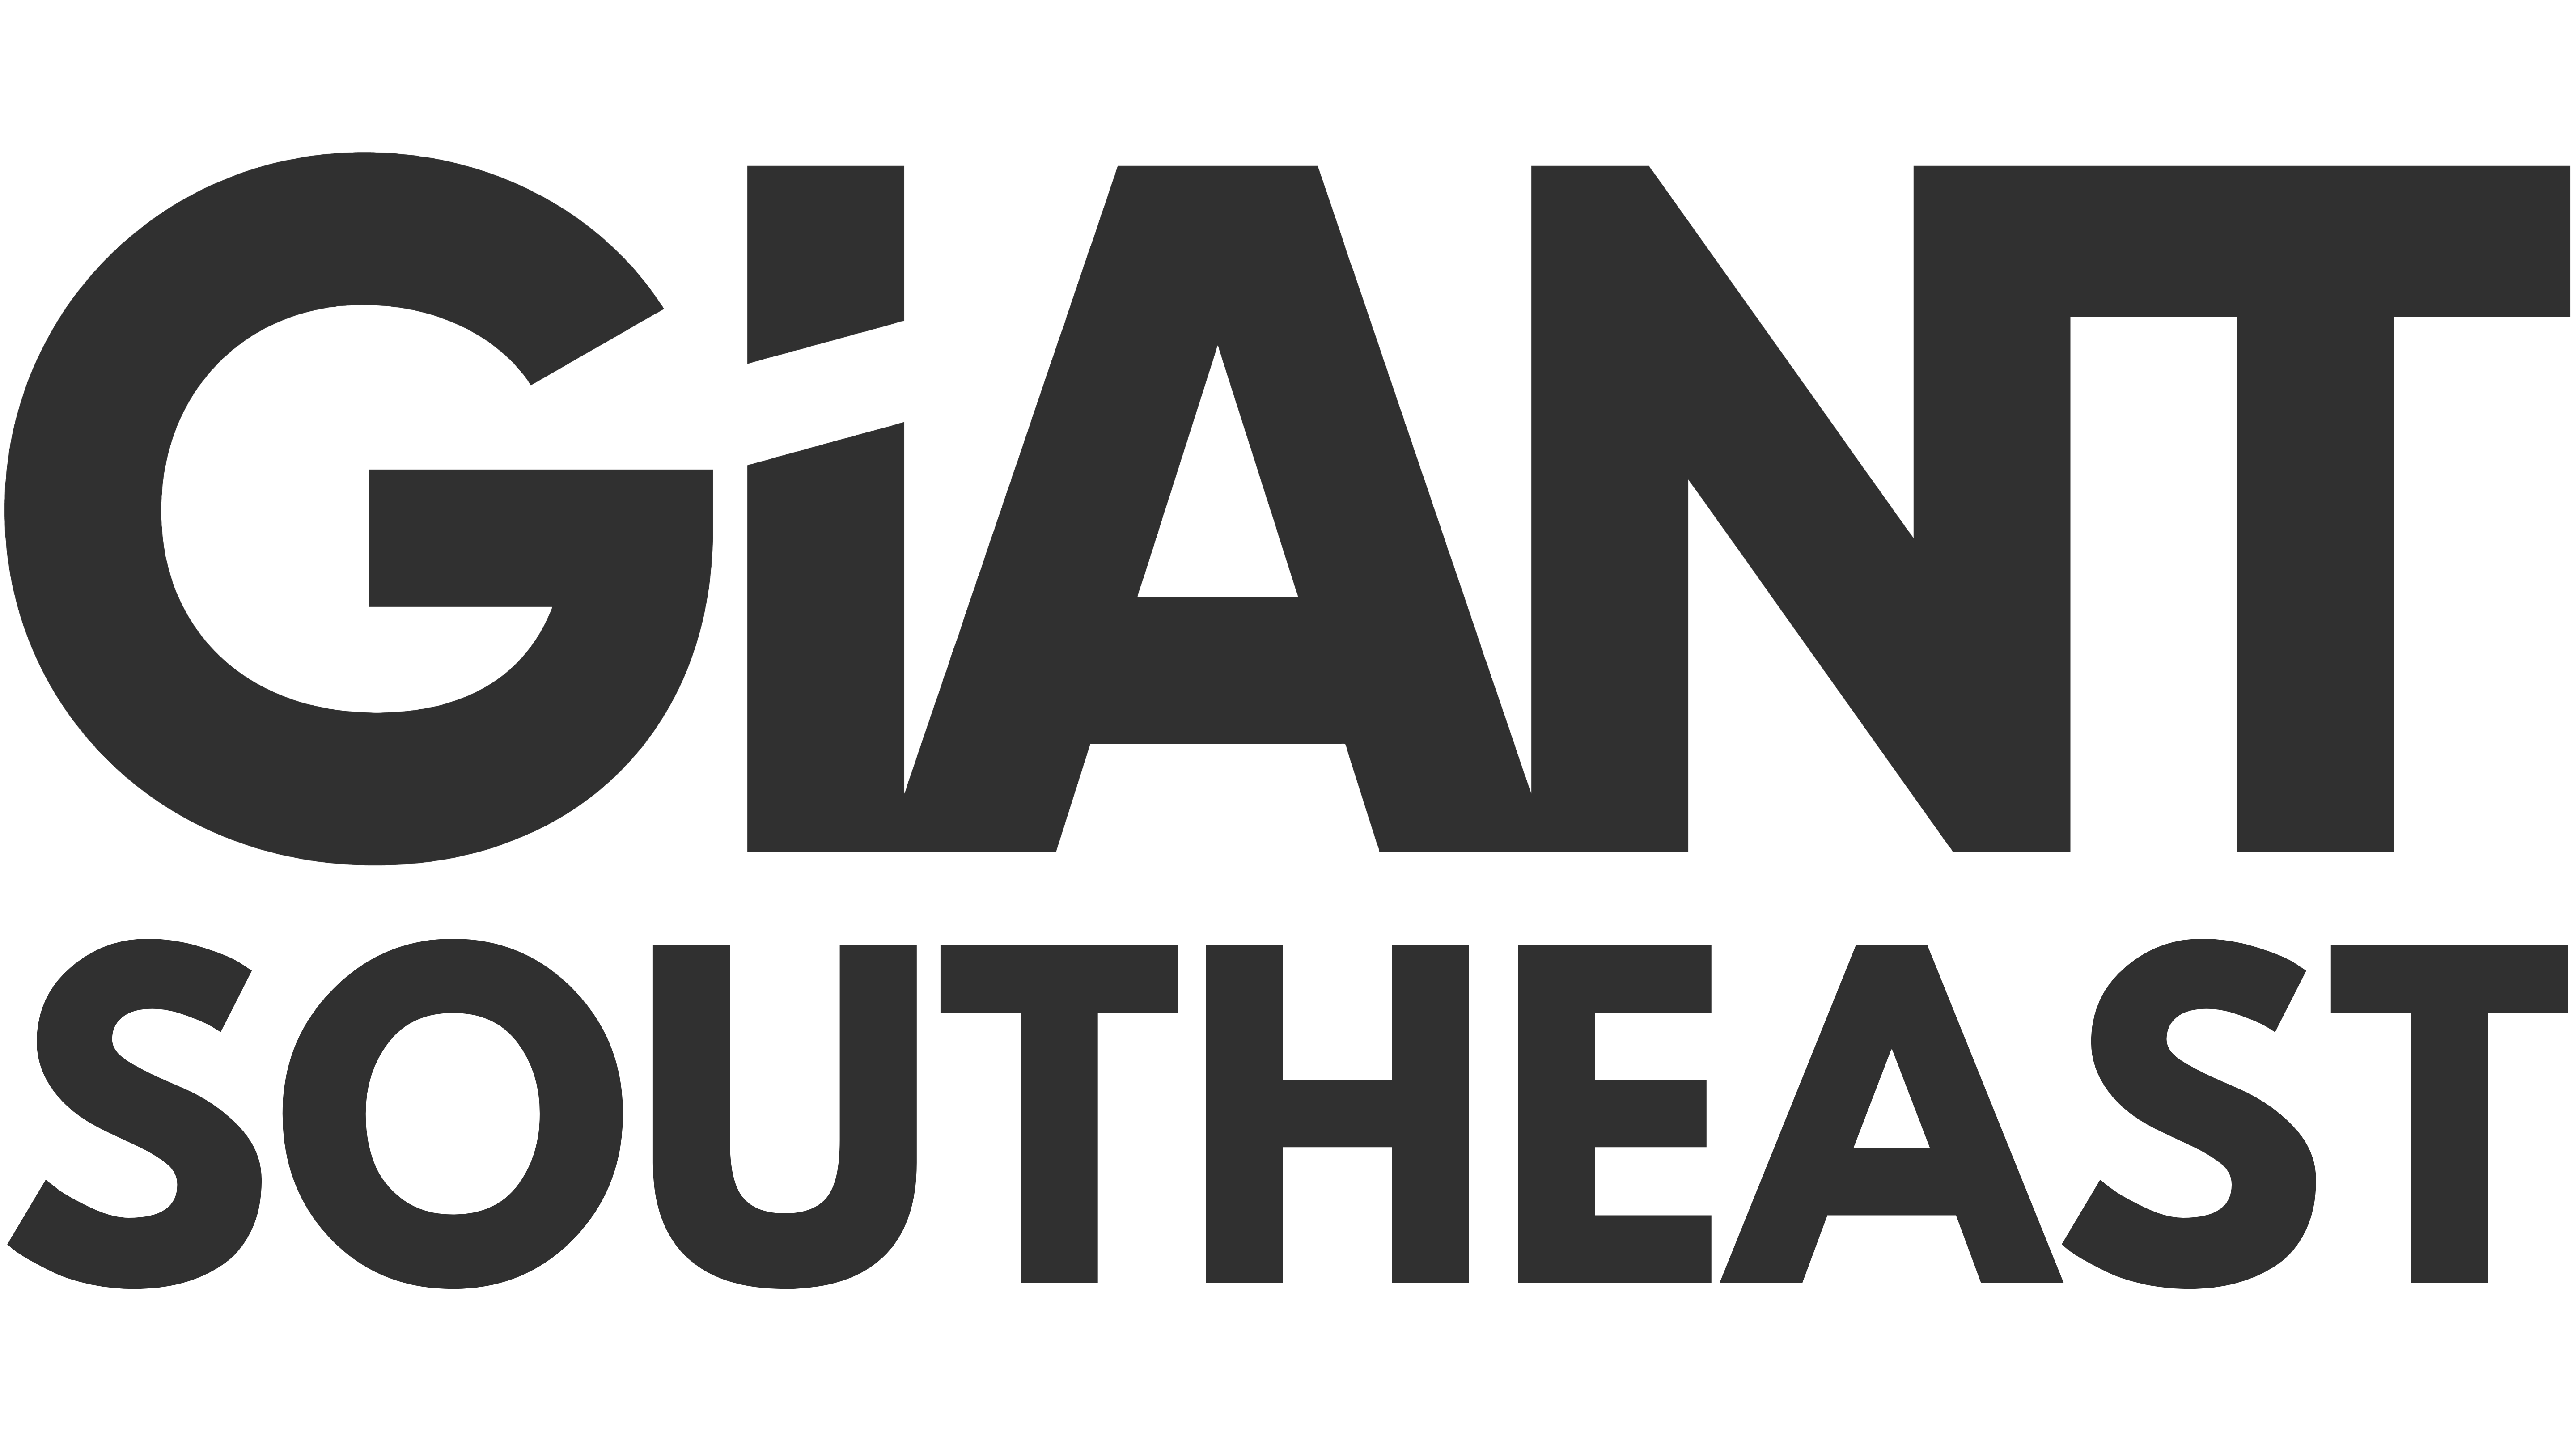 GiANT Southeast